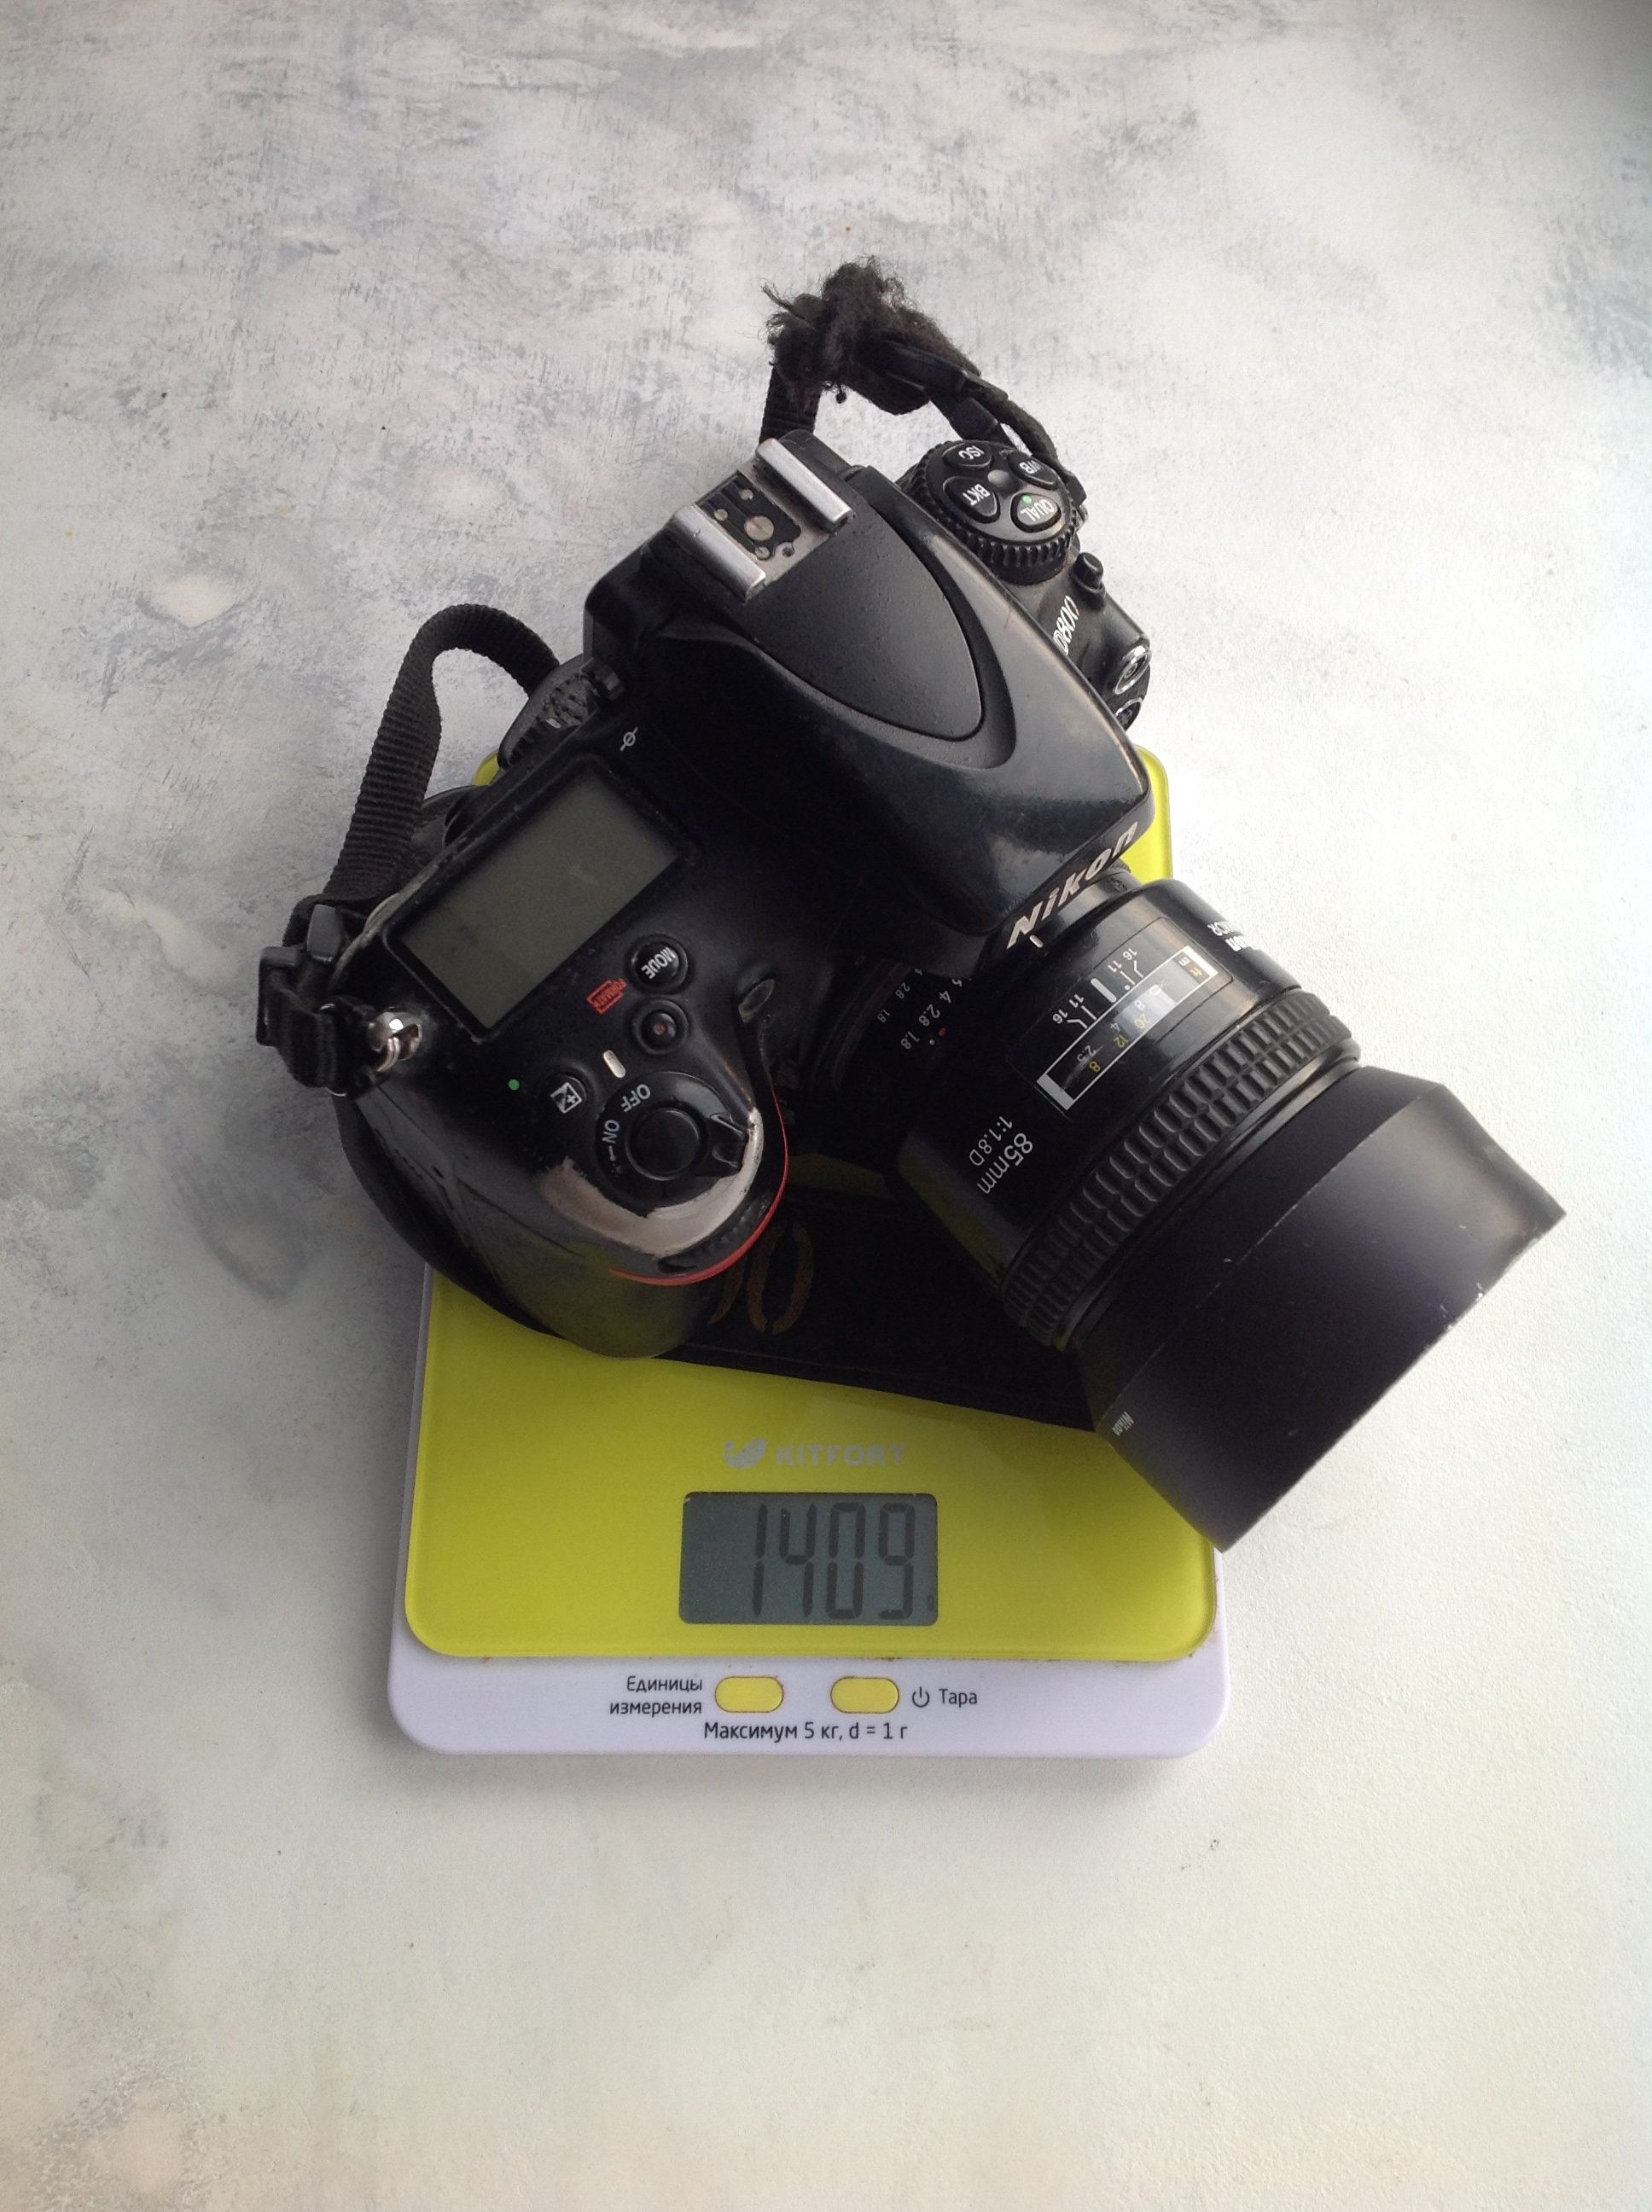 nikon d800 camera weight with lens